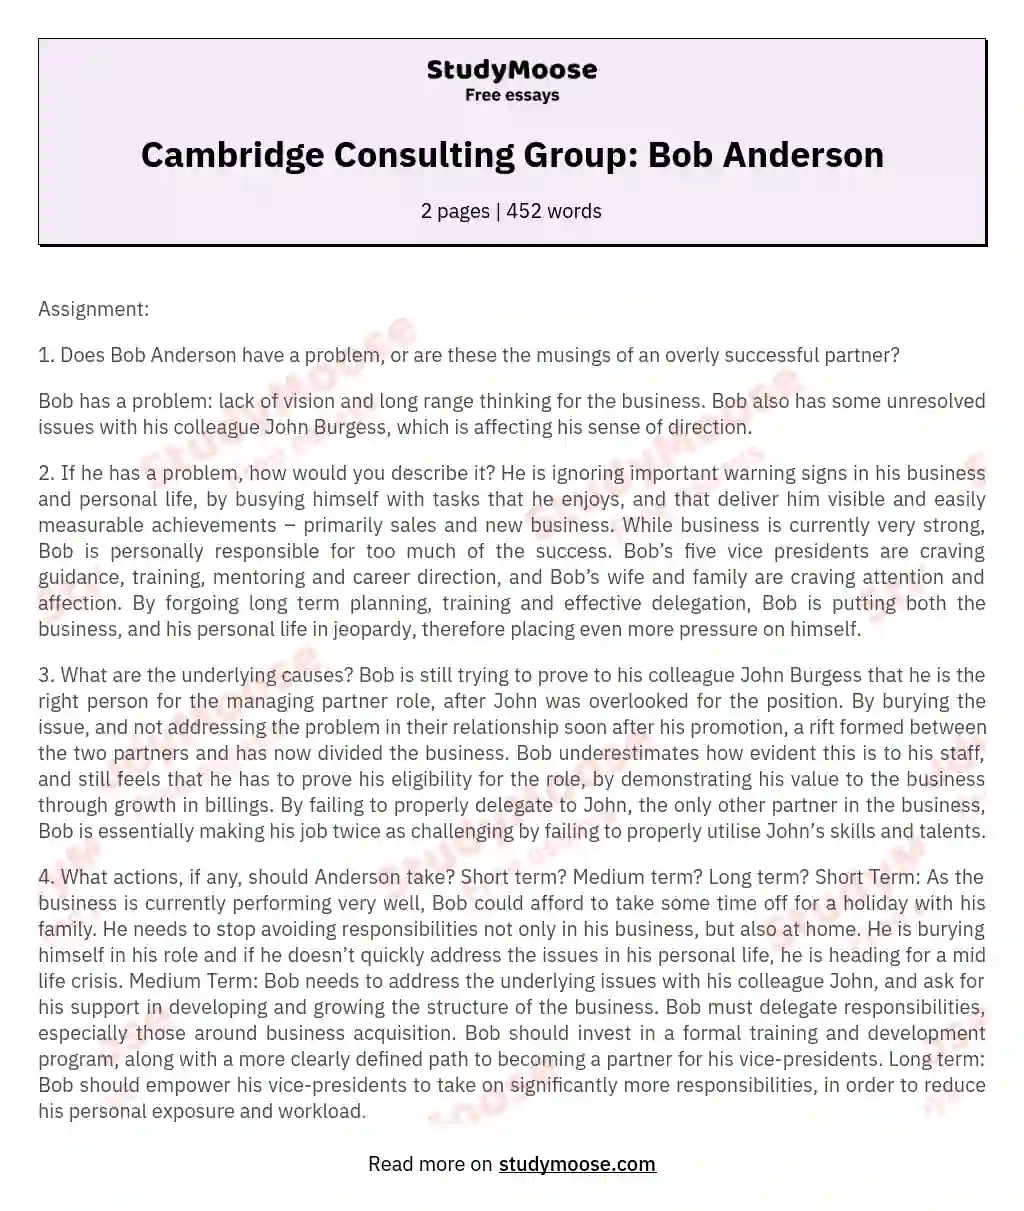 Cambridge Consulting Group: Bob Anderson